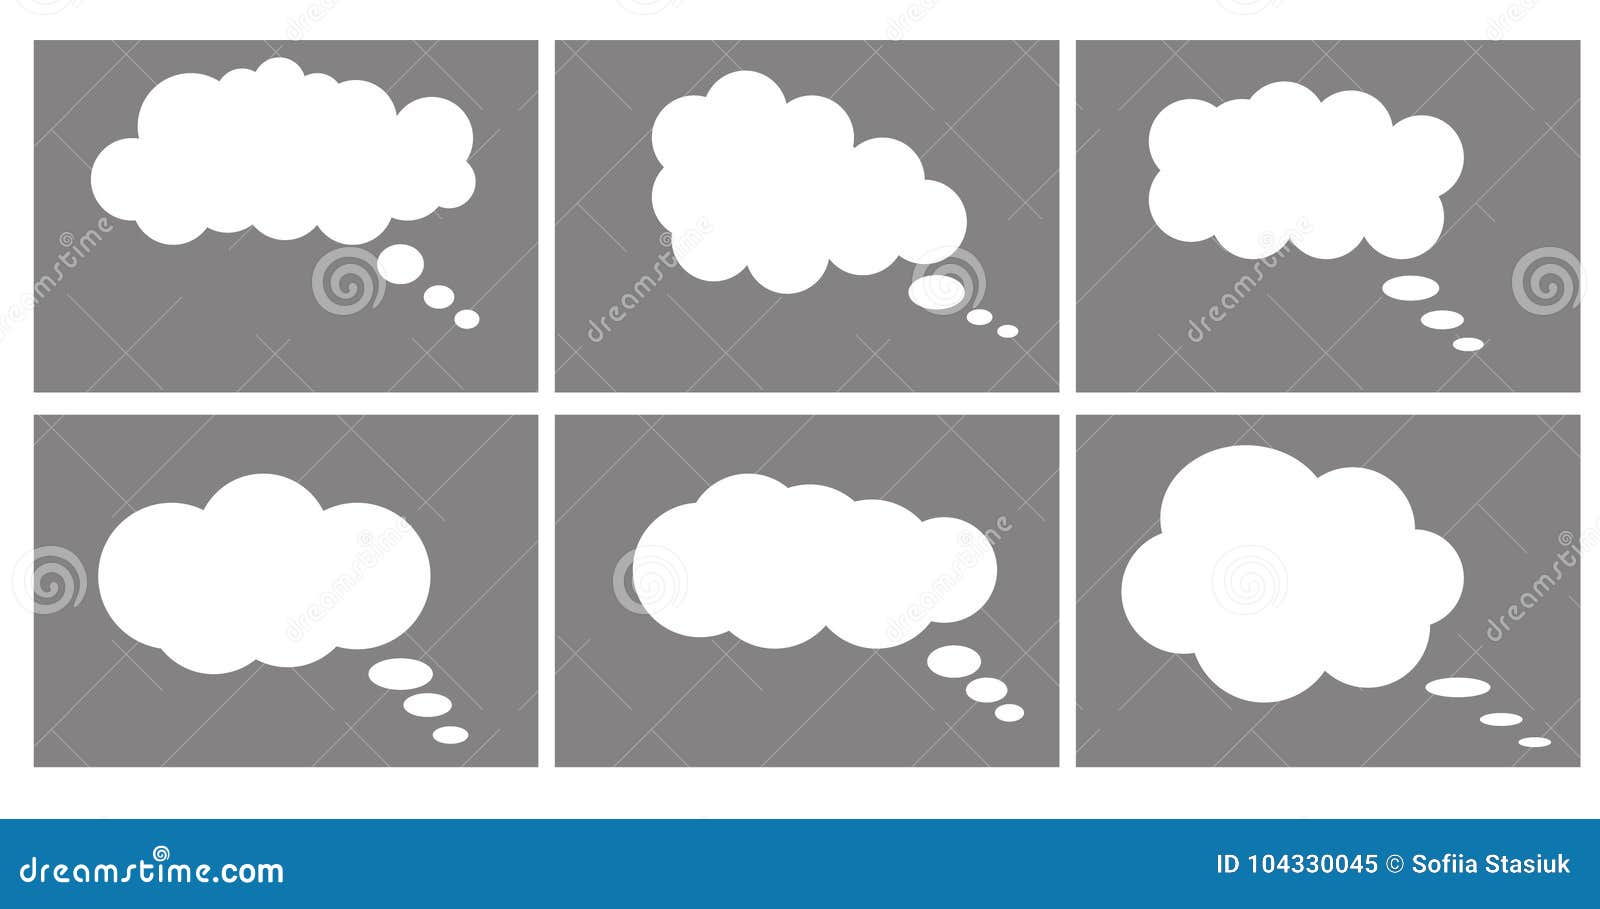 dialog box icon, chat cartoon bubbles. thinking cloud.